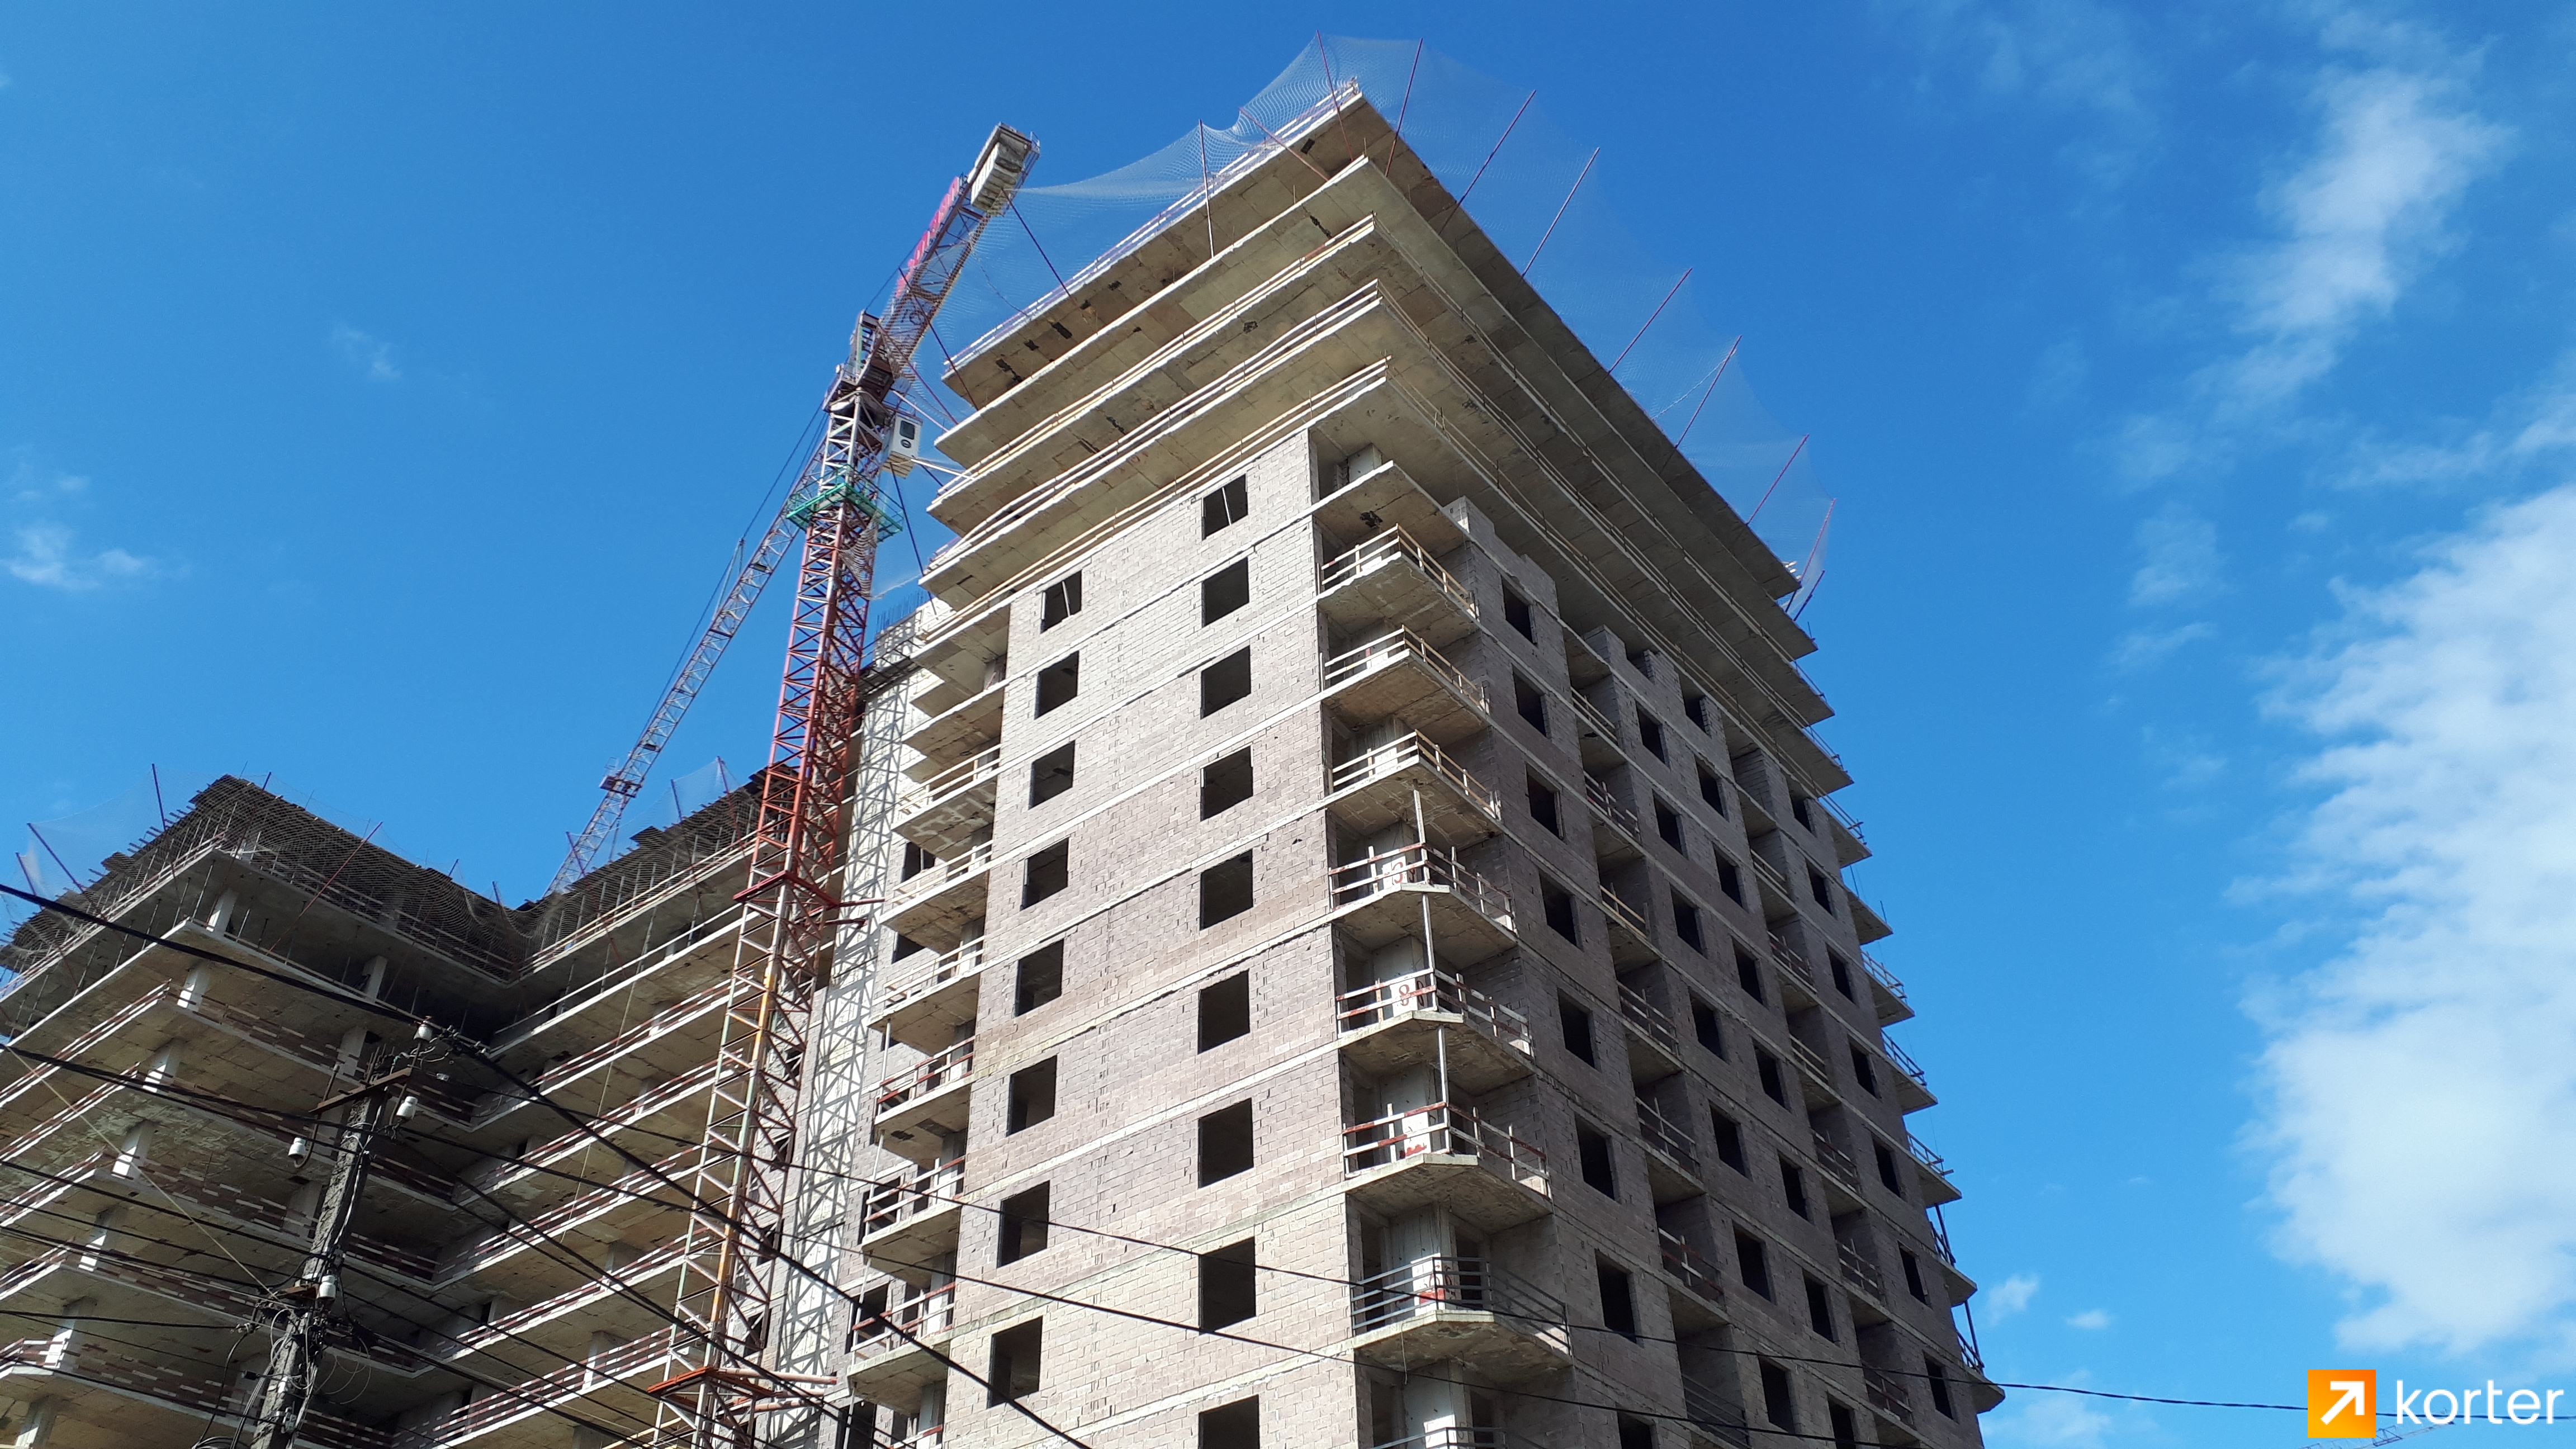 Construction progress Nev Tower - Angle 6, April 2022